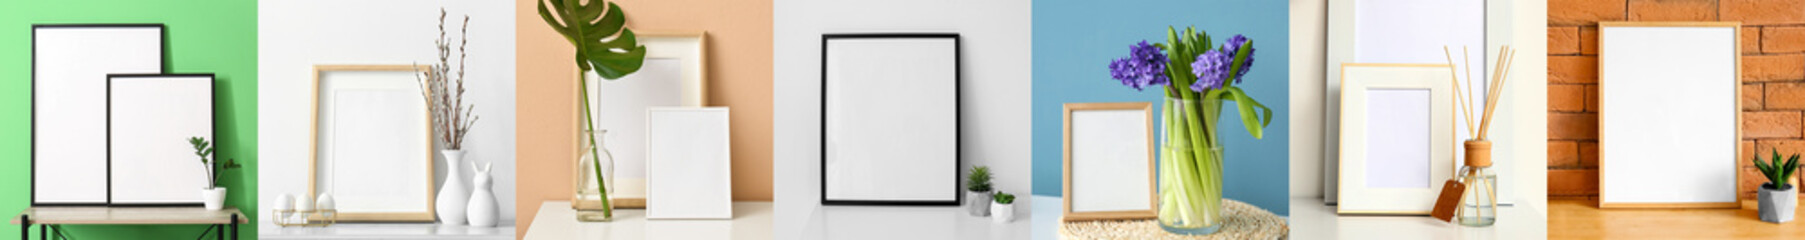 Set of blank photo frames in modern interiors